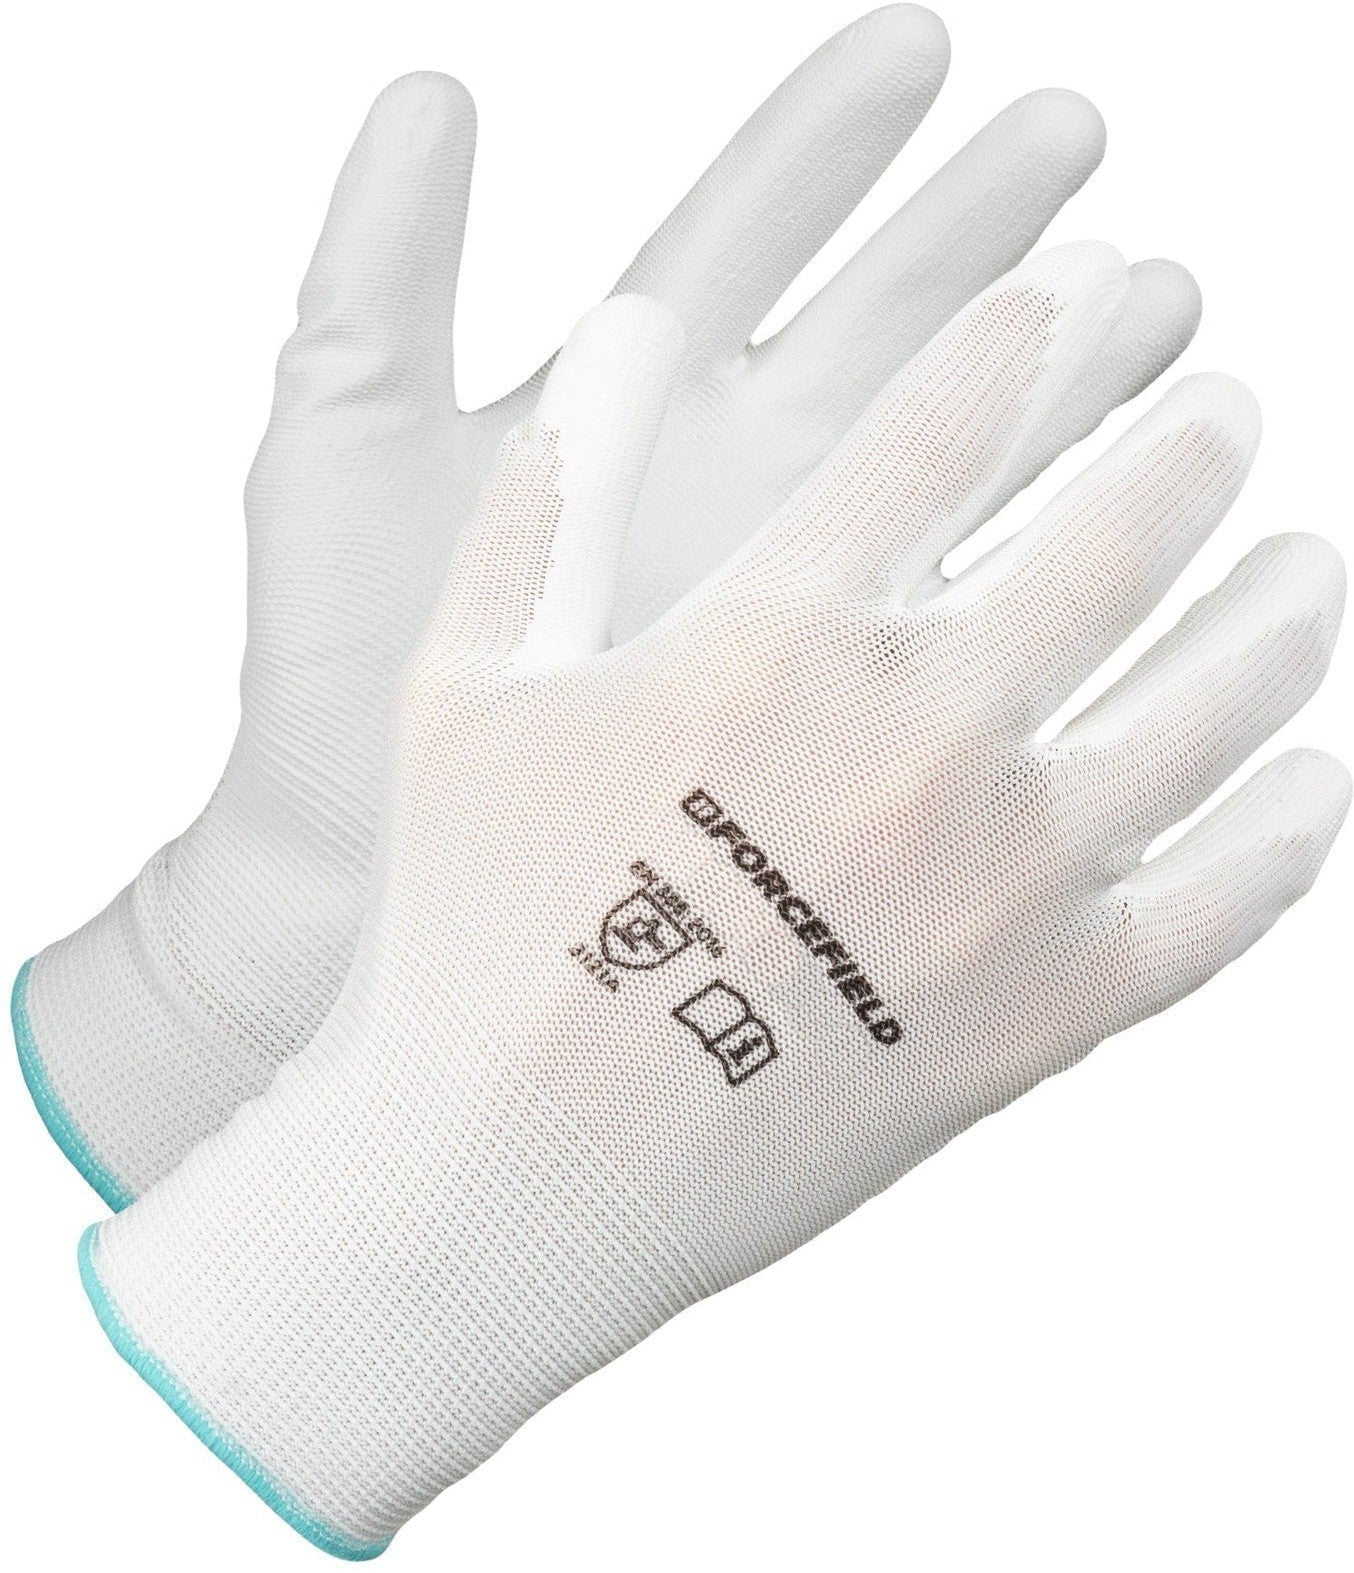 Forcefield - Medium White Nylon Polyurethane Palm Coated Glove - 004-134-08-WHT